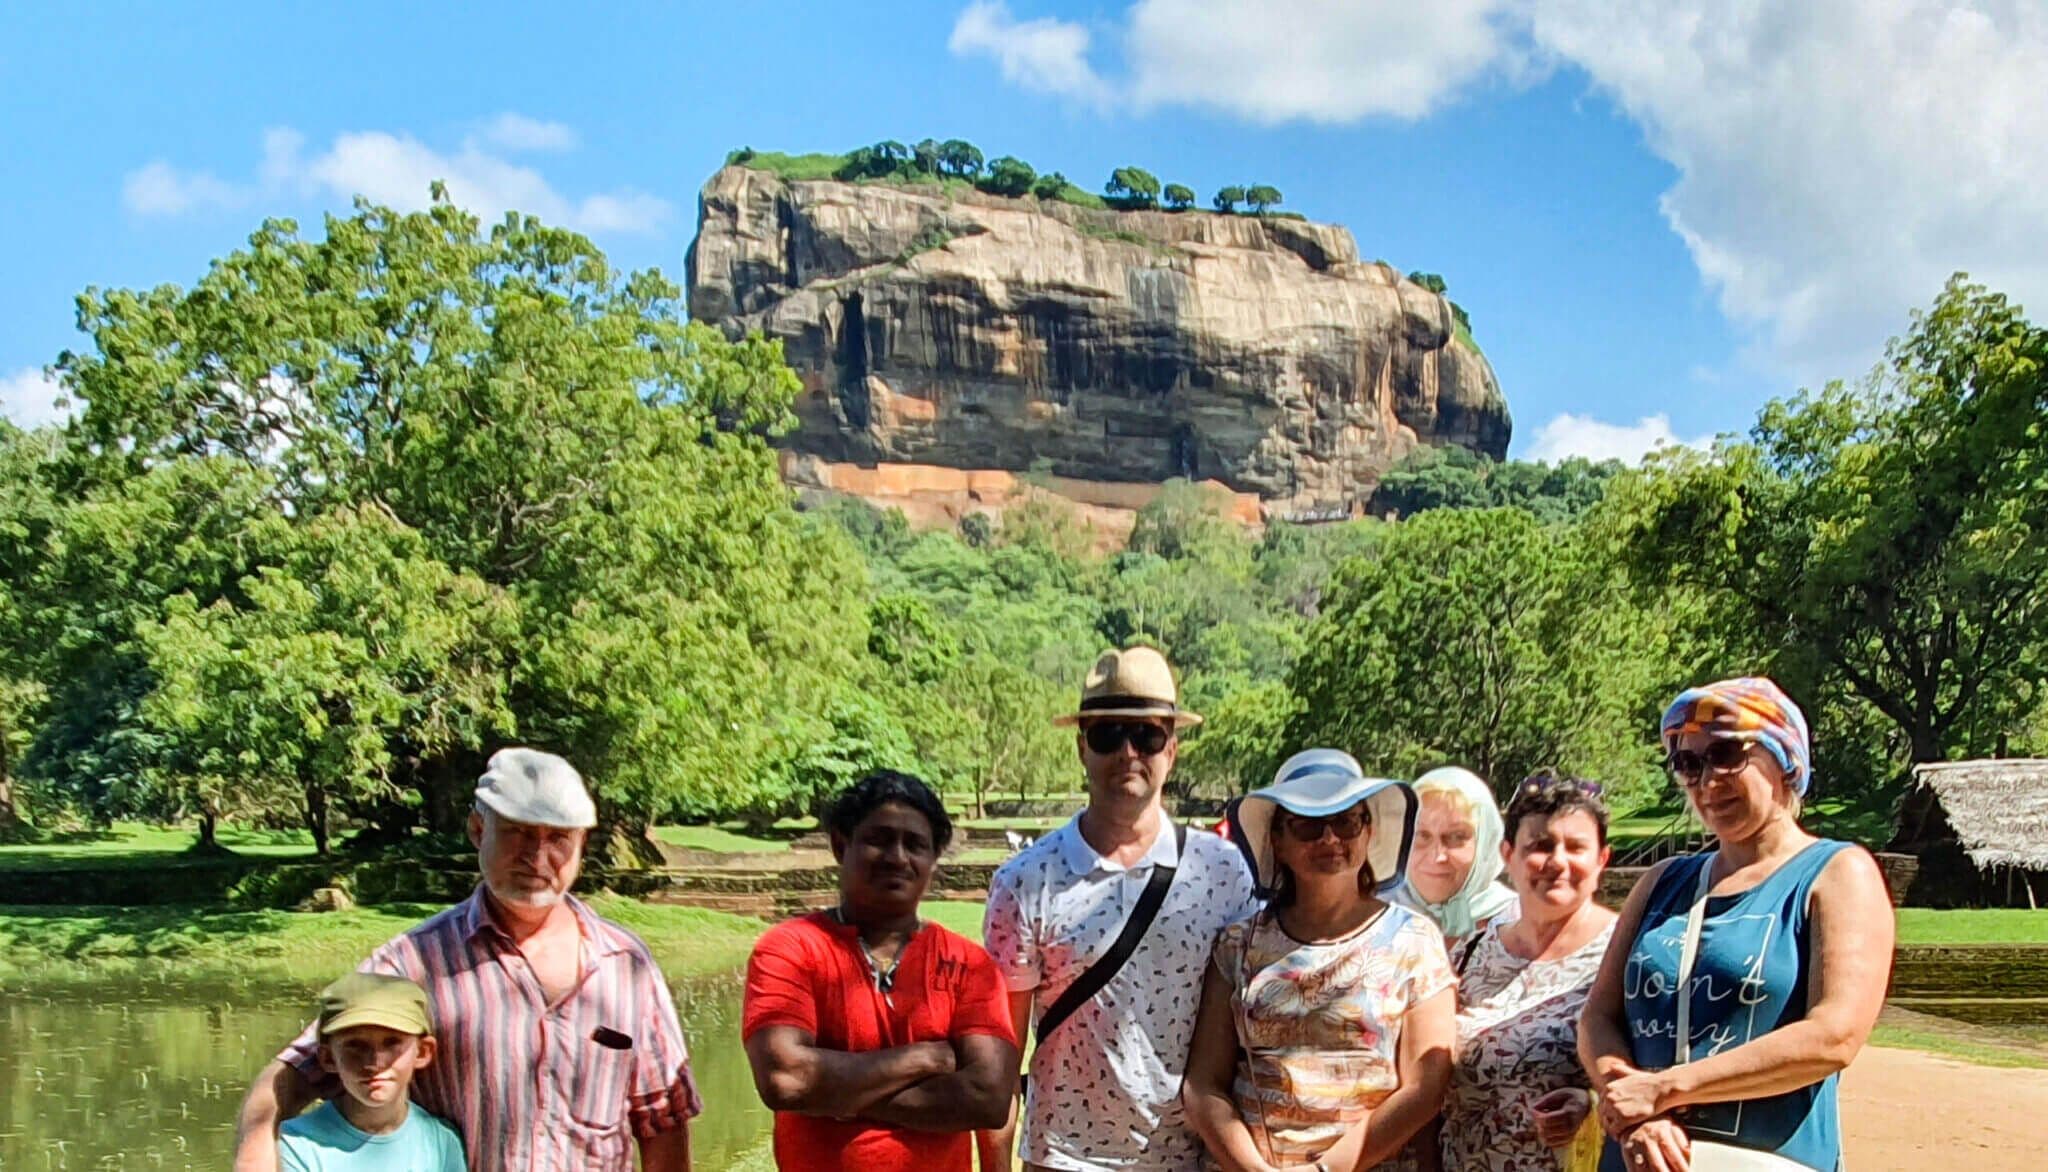 The tourists visit Sigiriya Lion's Rock In Sri Lanka